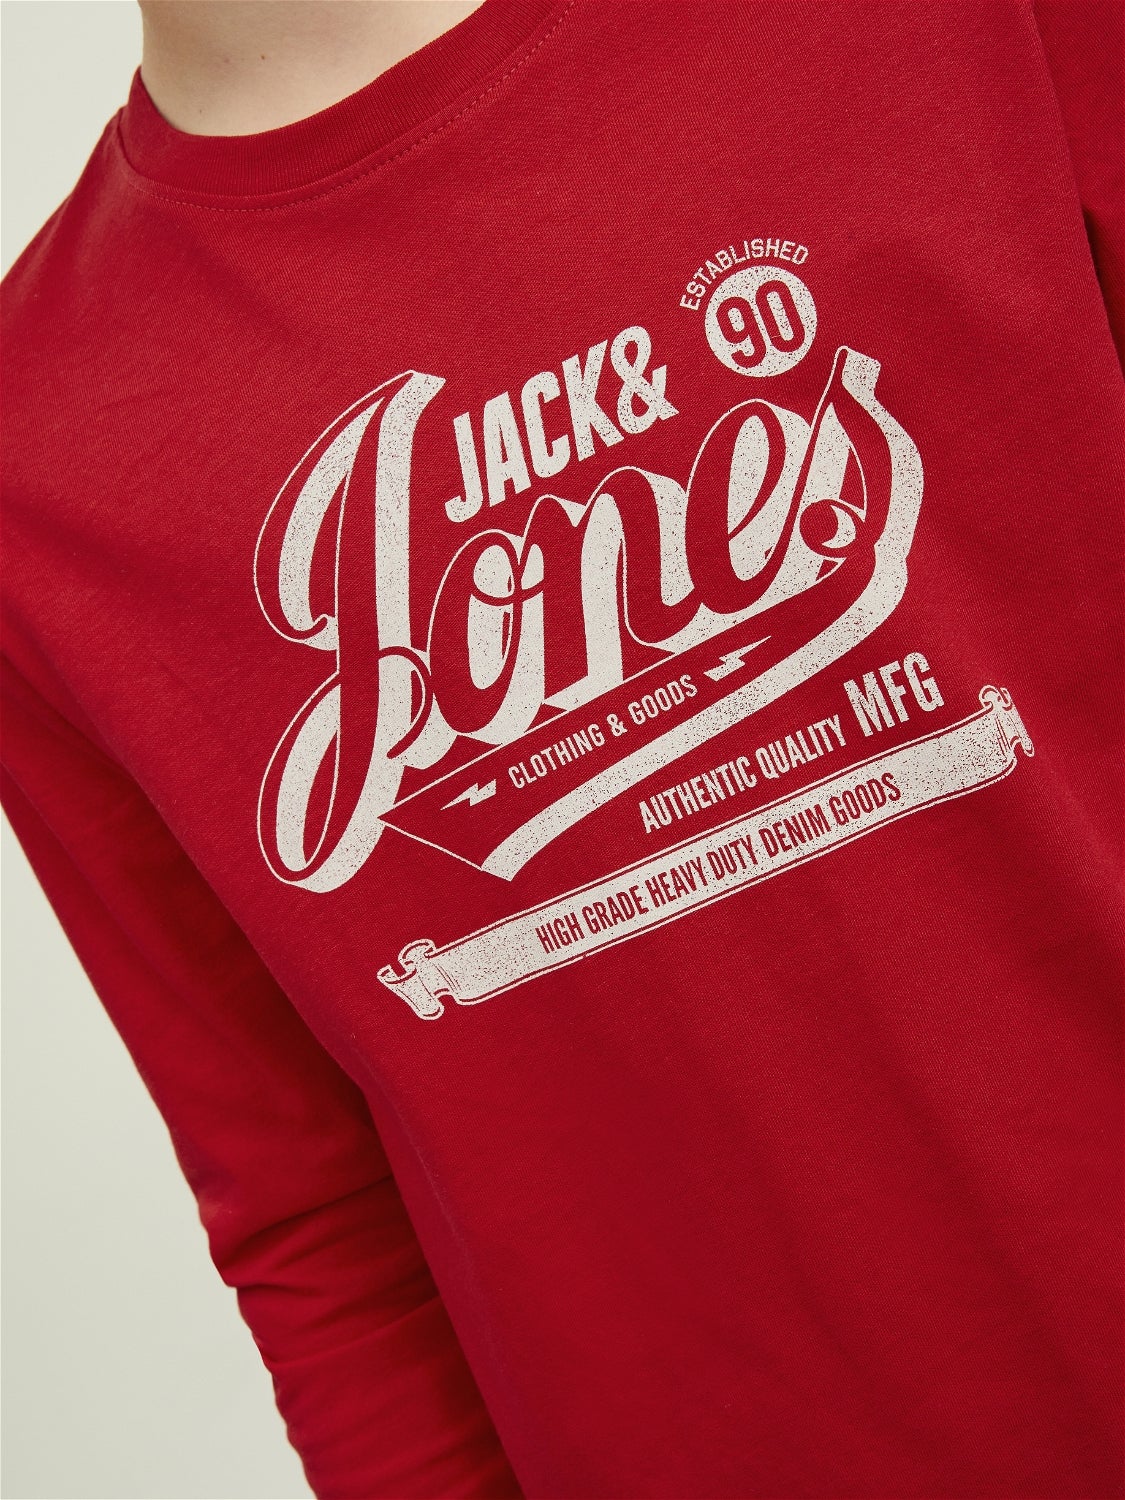 Jack Jones Logo Stock Photos - Free & Royalty-Free Stock Photos from  Dreamstime